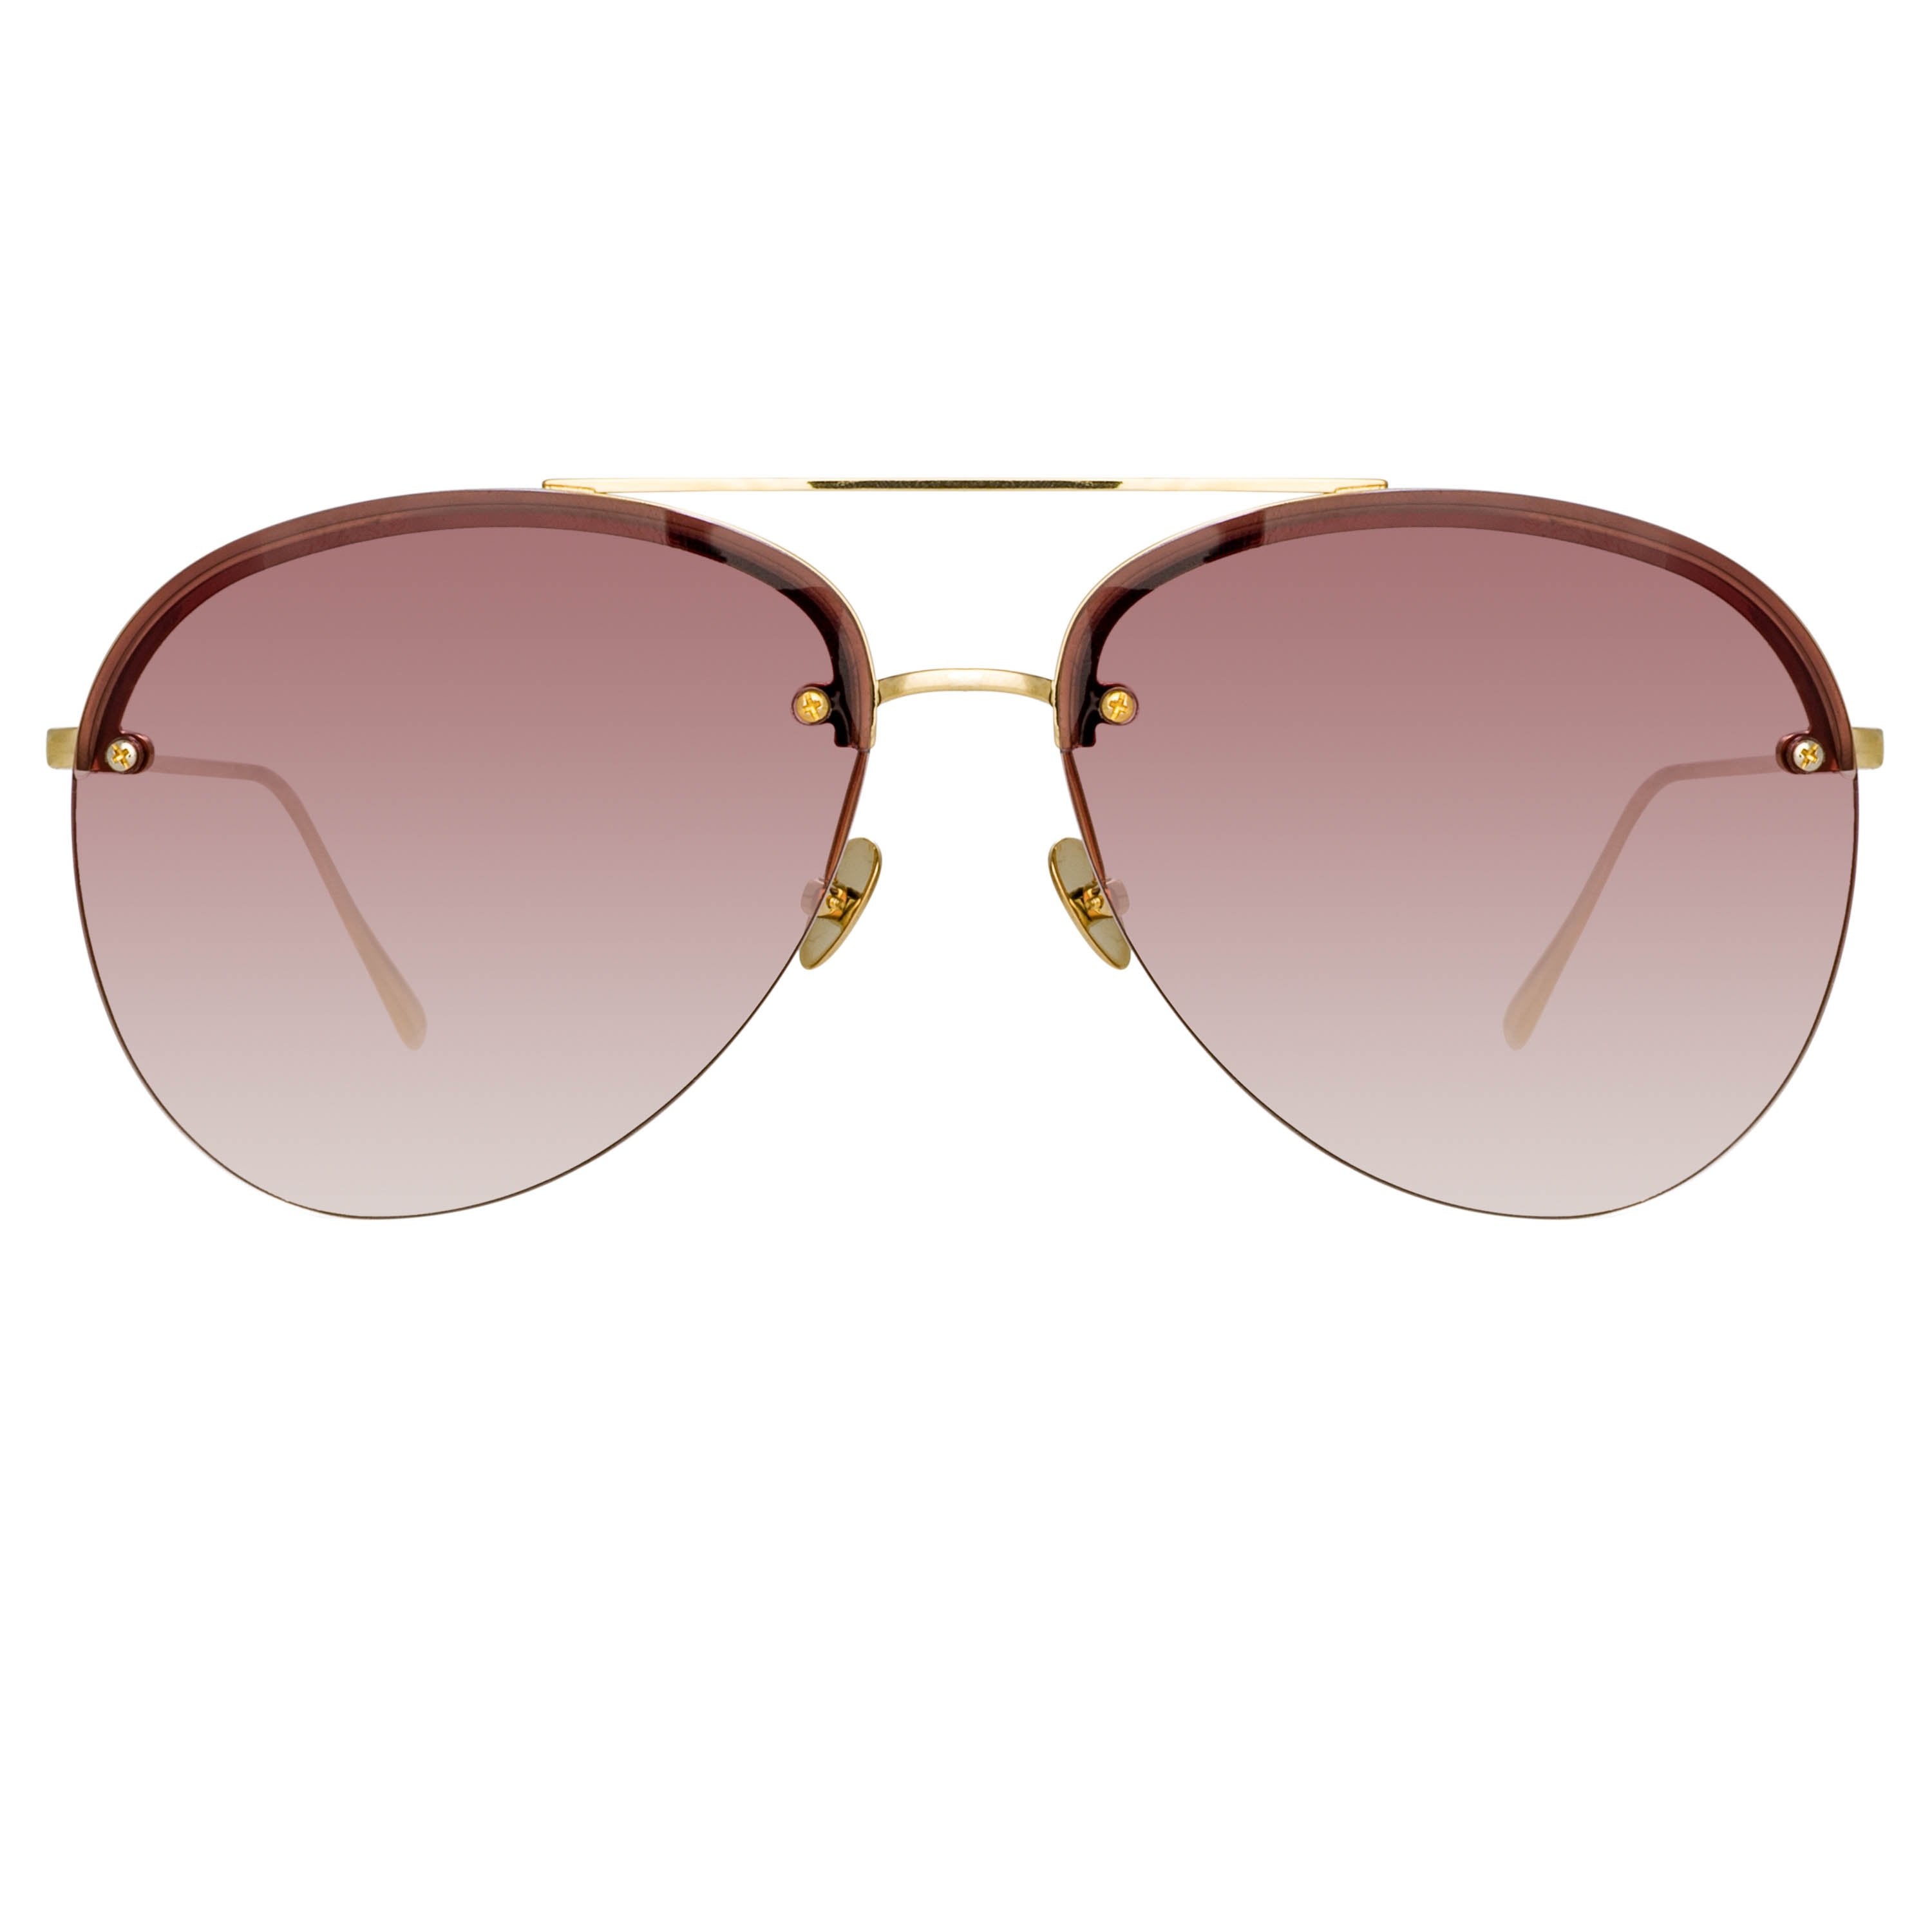 Color_LFL1096C4SUN - Dee Aviator Sunglasses in Light Gold and Burgundy